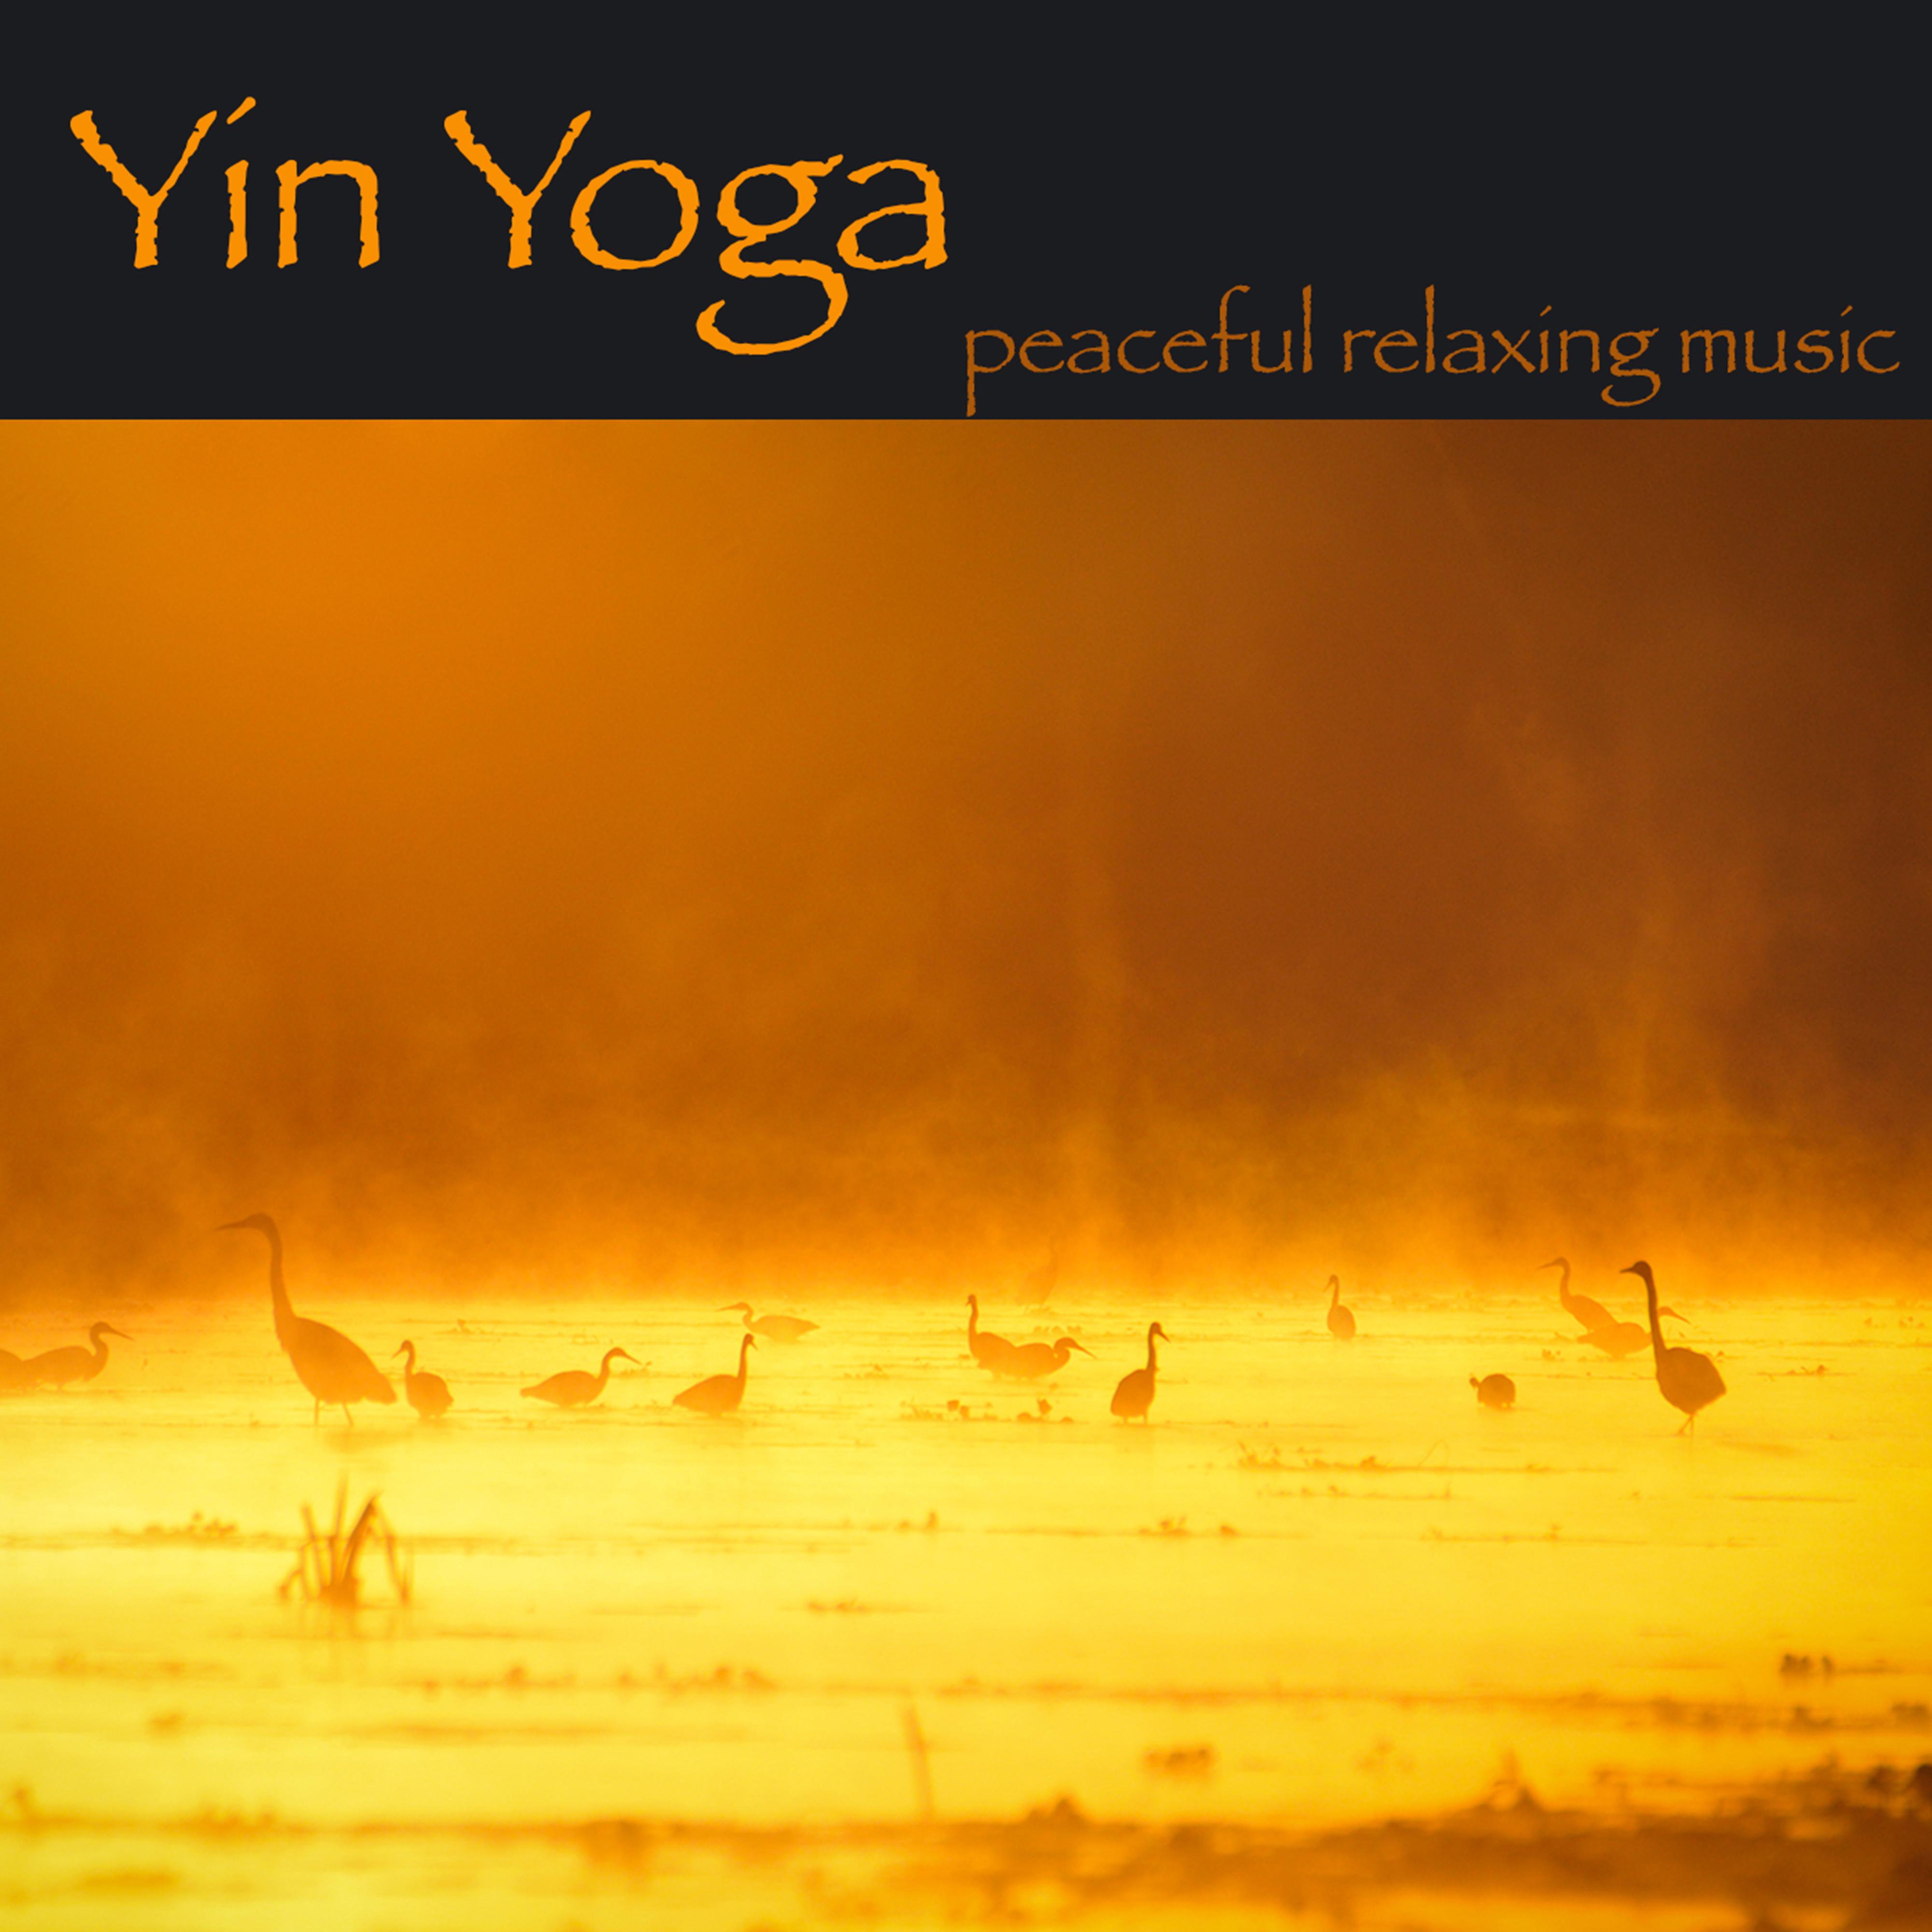 Yin Yoga - Peaceful Relaxing Music for Yoga Classes, Tai Chi, Restorative Yoga and Mindfulness Meditation